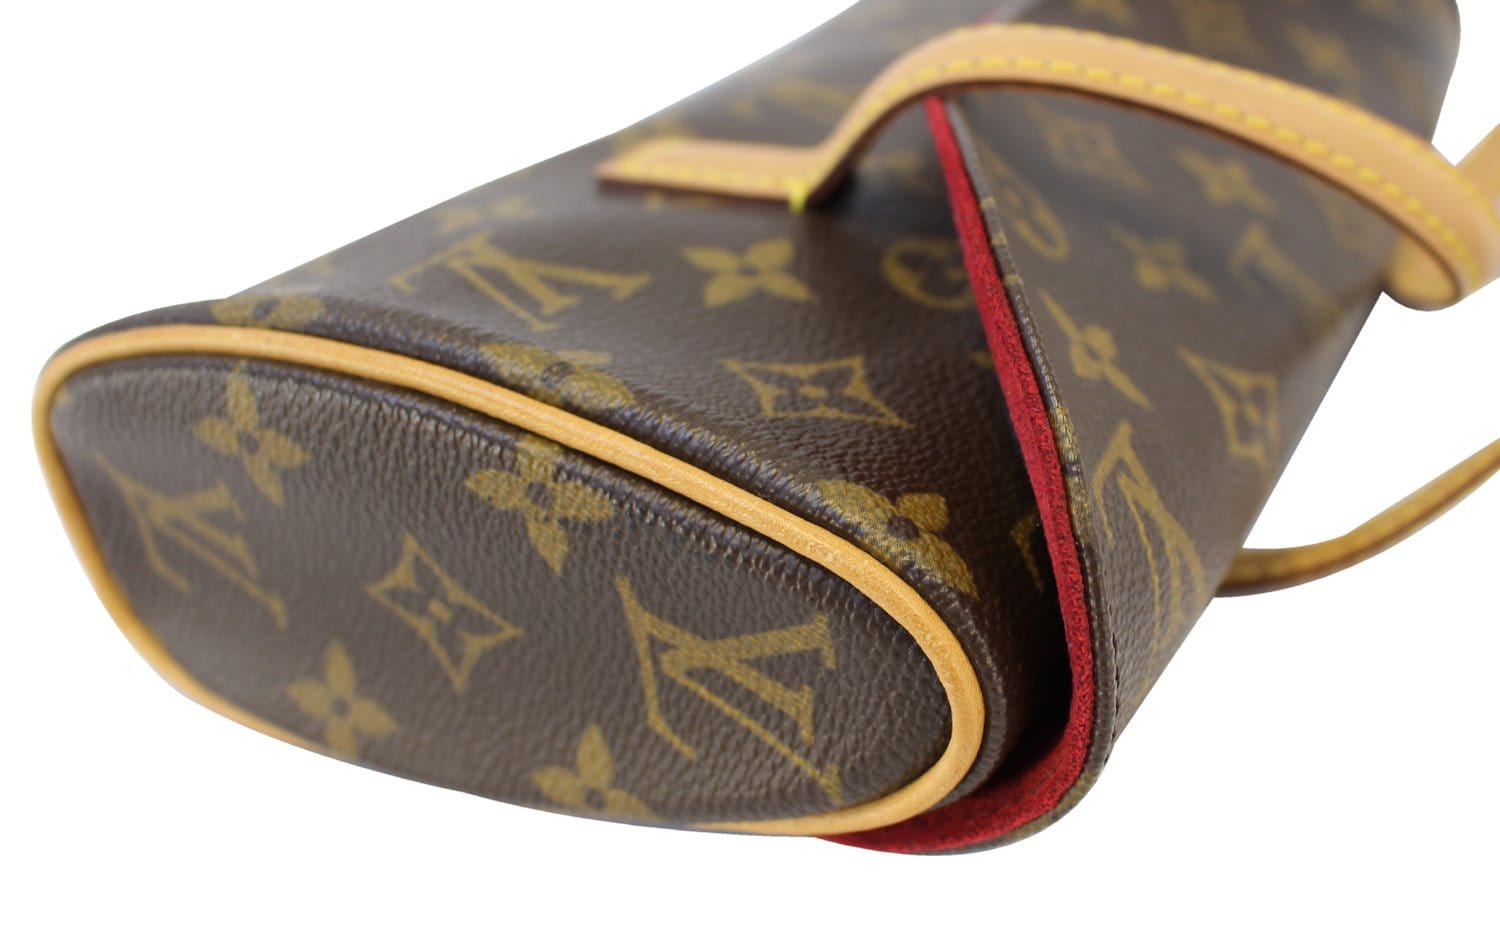 NTWRK - Preloved Louis Vuitton Sonatine Monogram Handbag VI0052 092623 $